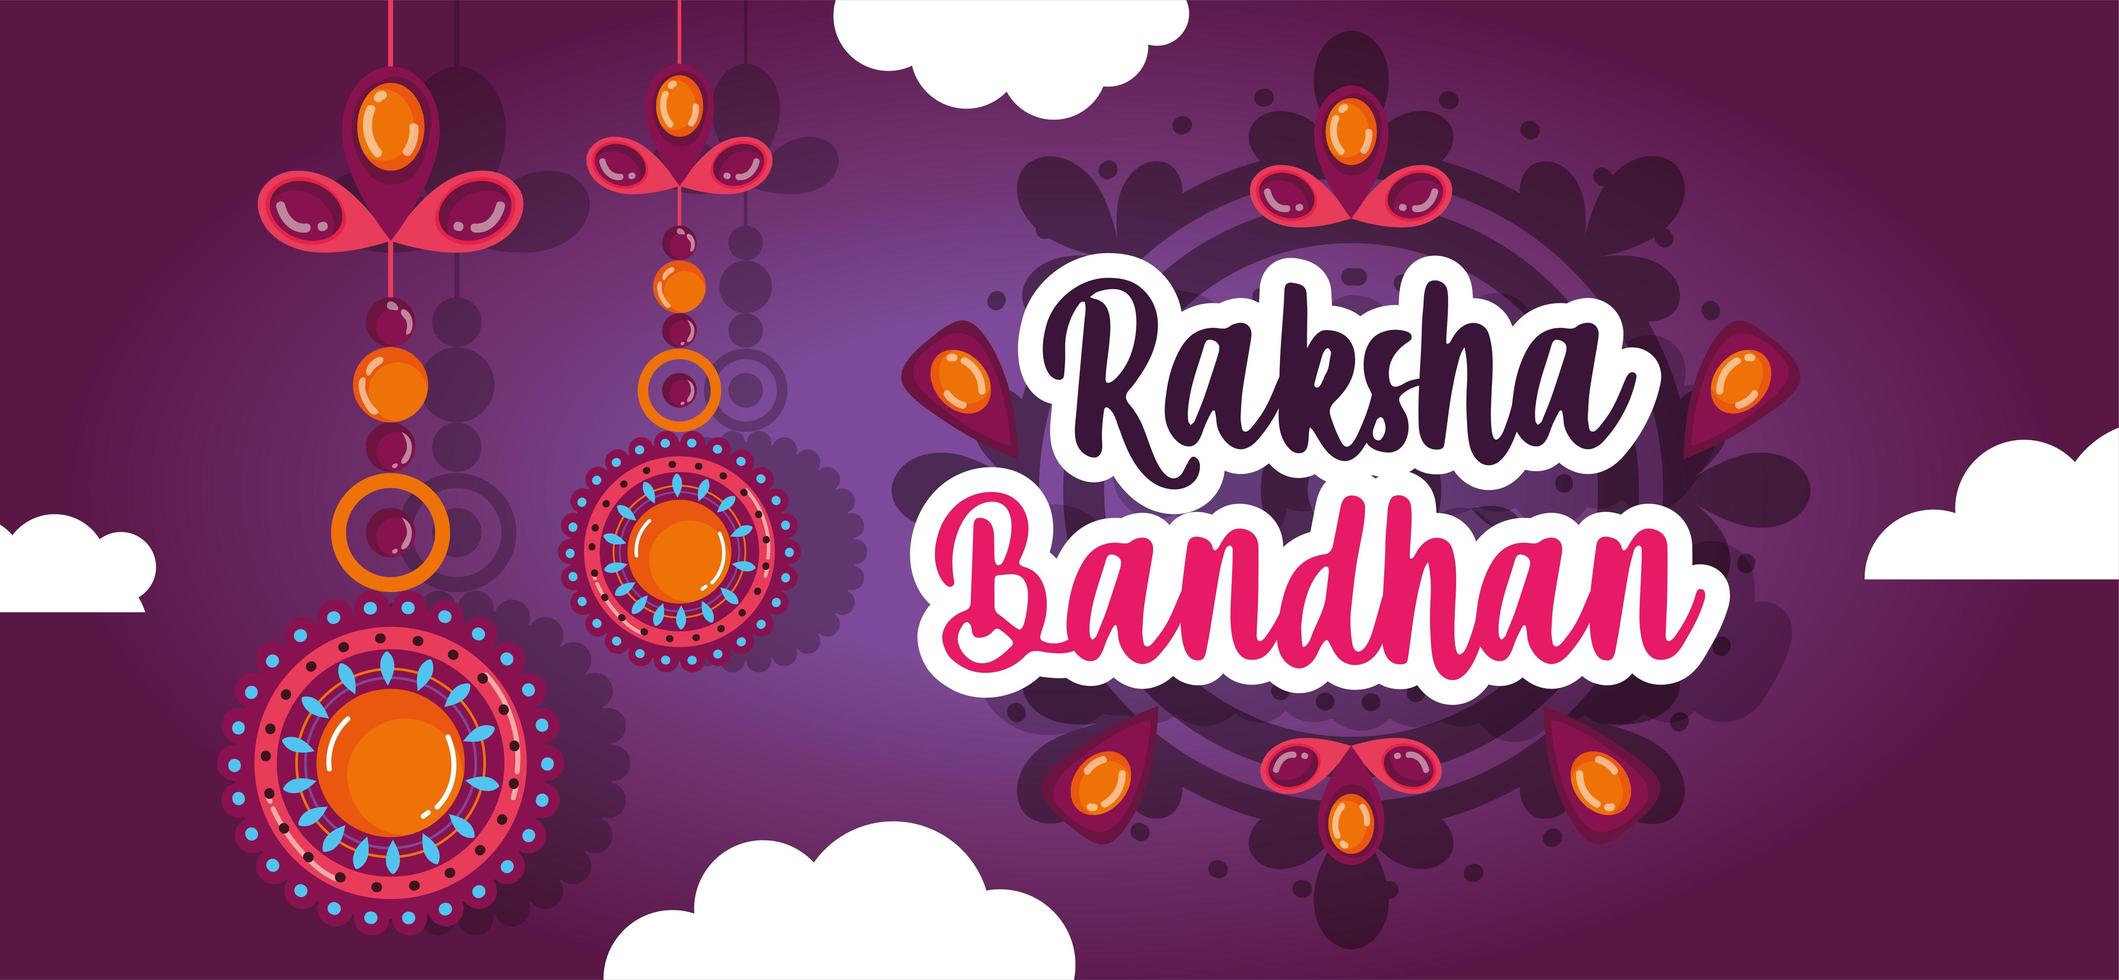 happy raksha bandhan banner design vector